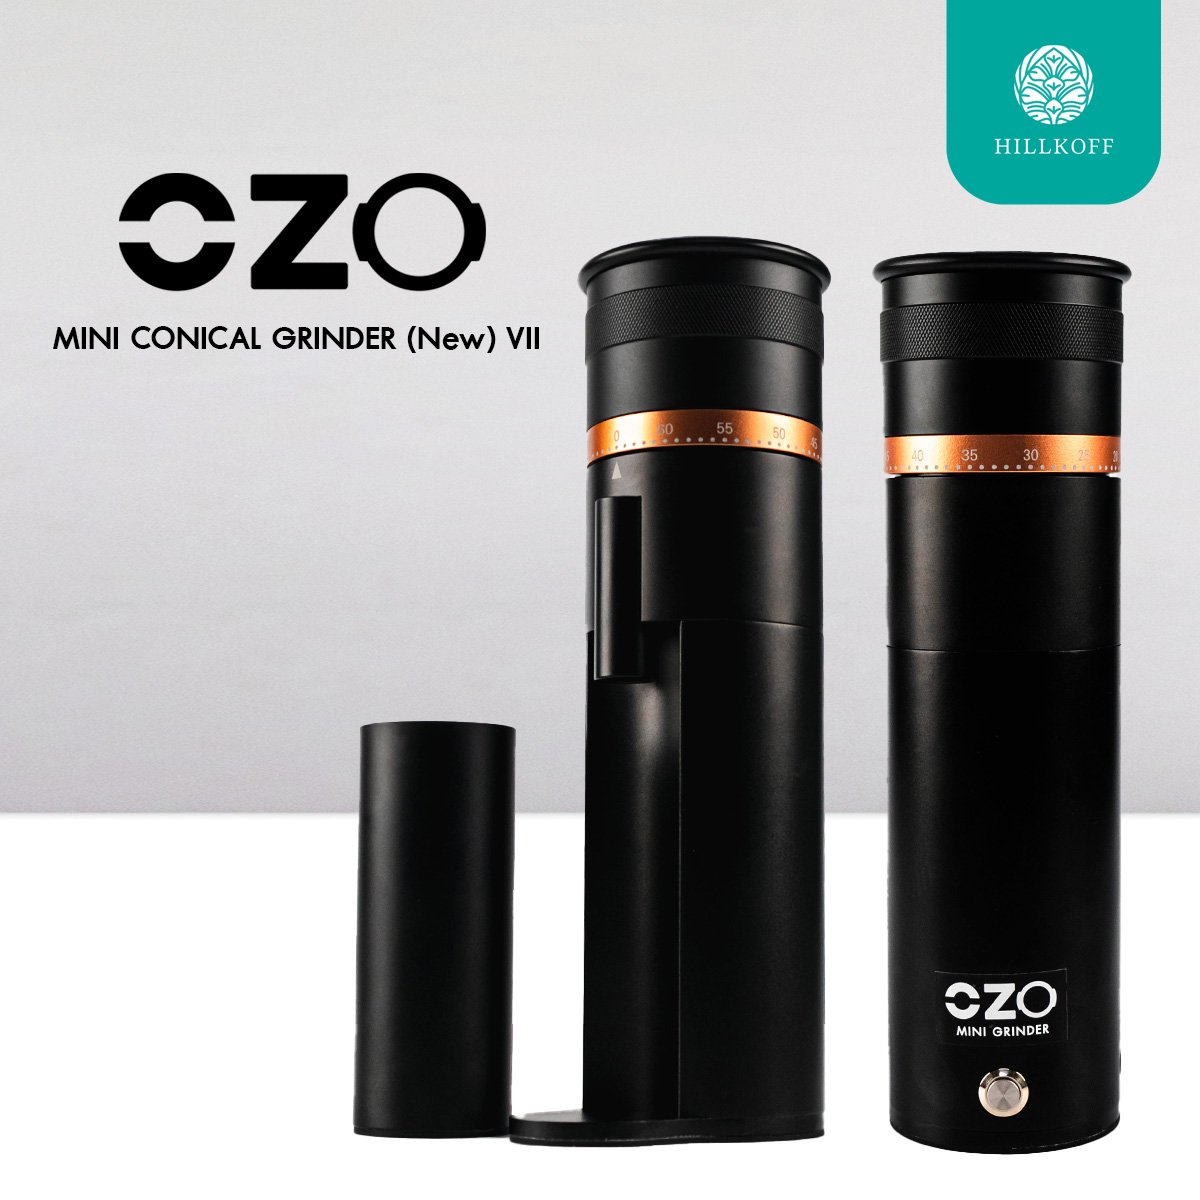 Hillkoff : OZO Mini Conical Grinder VII